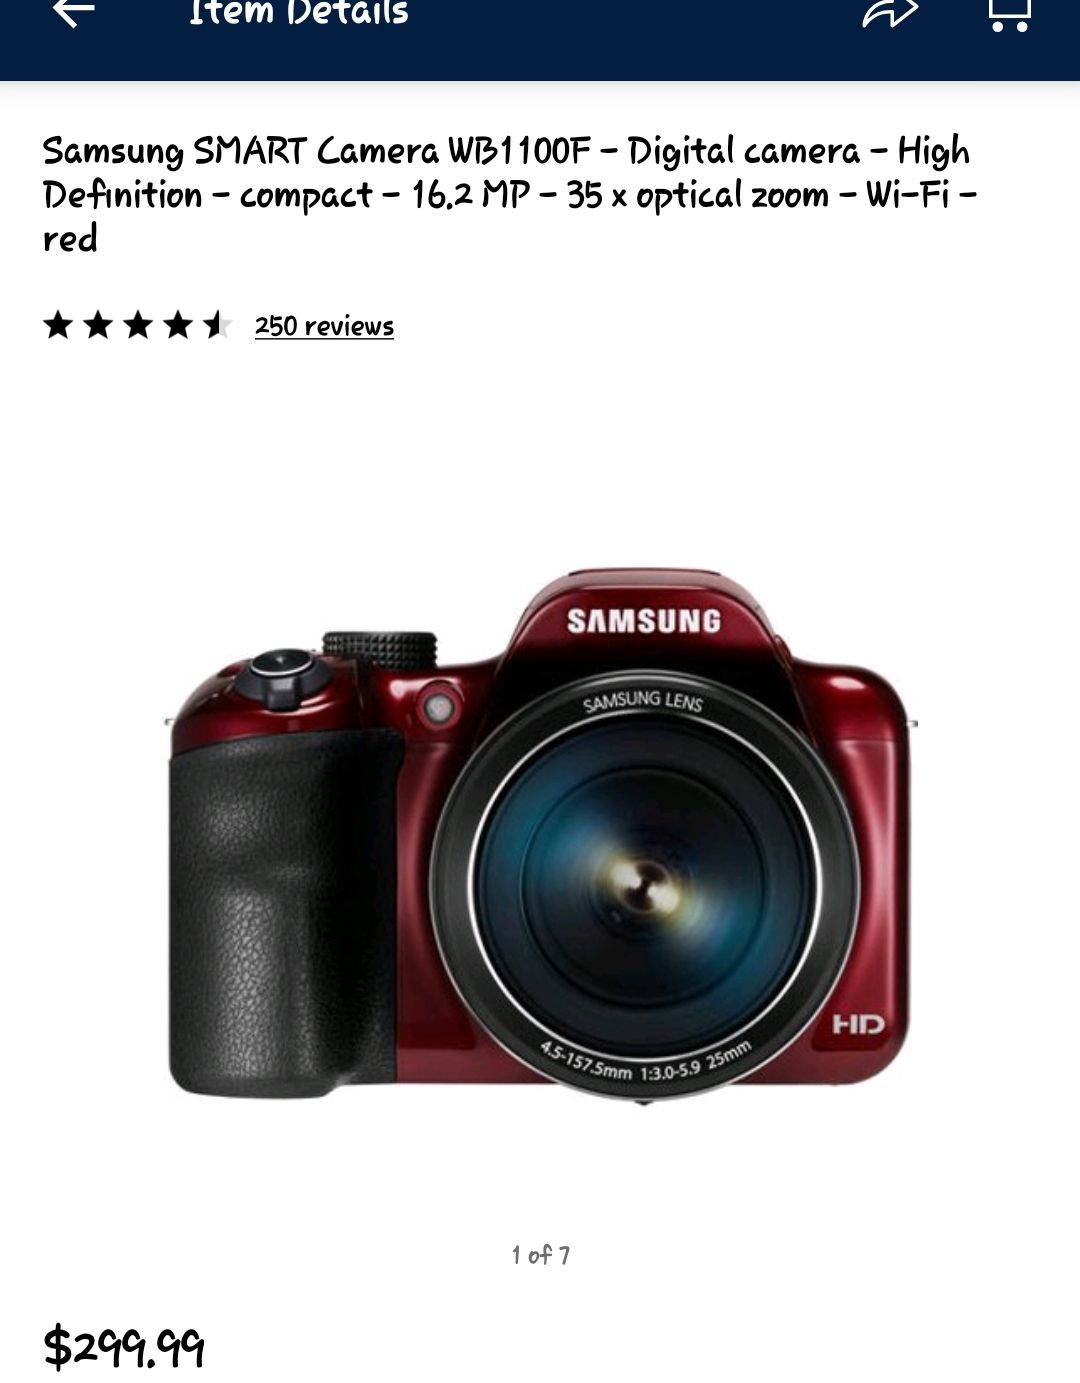 Samsung WIFI DIGITAL Camera many AMAZING SETTINGS & FILTERS